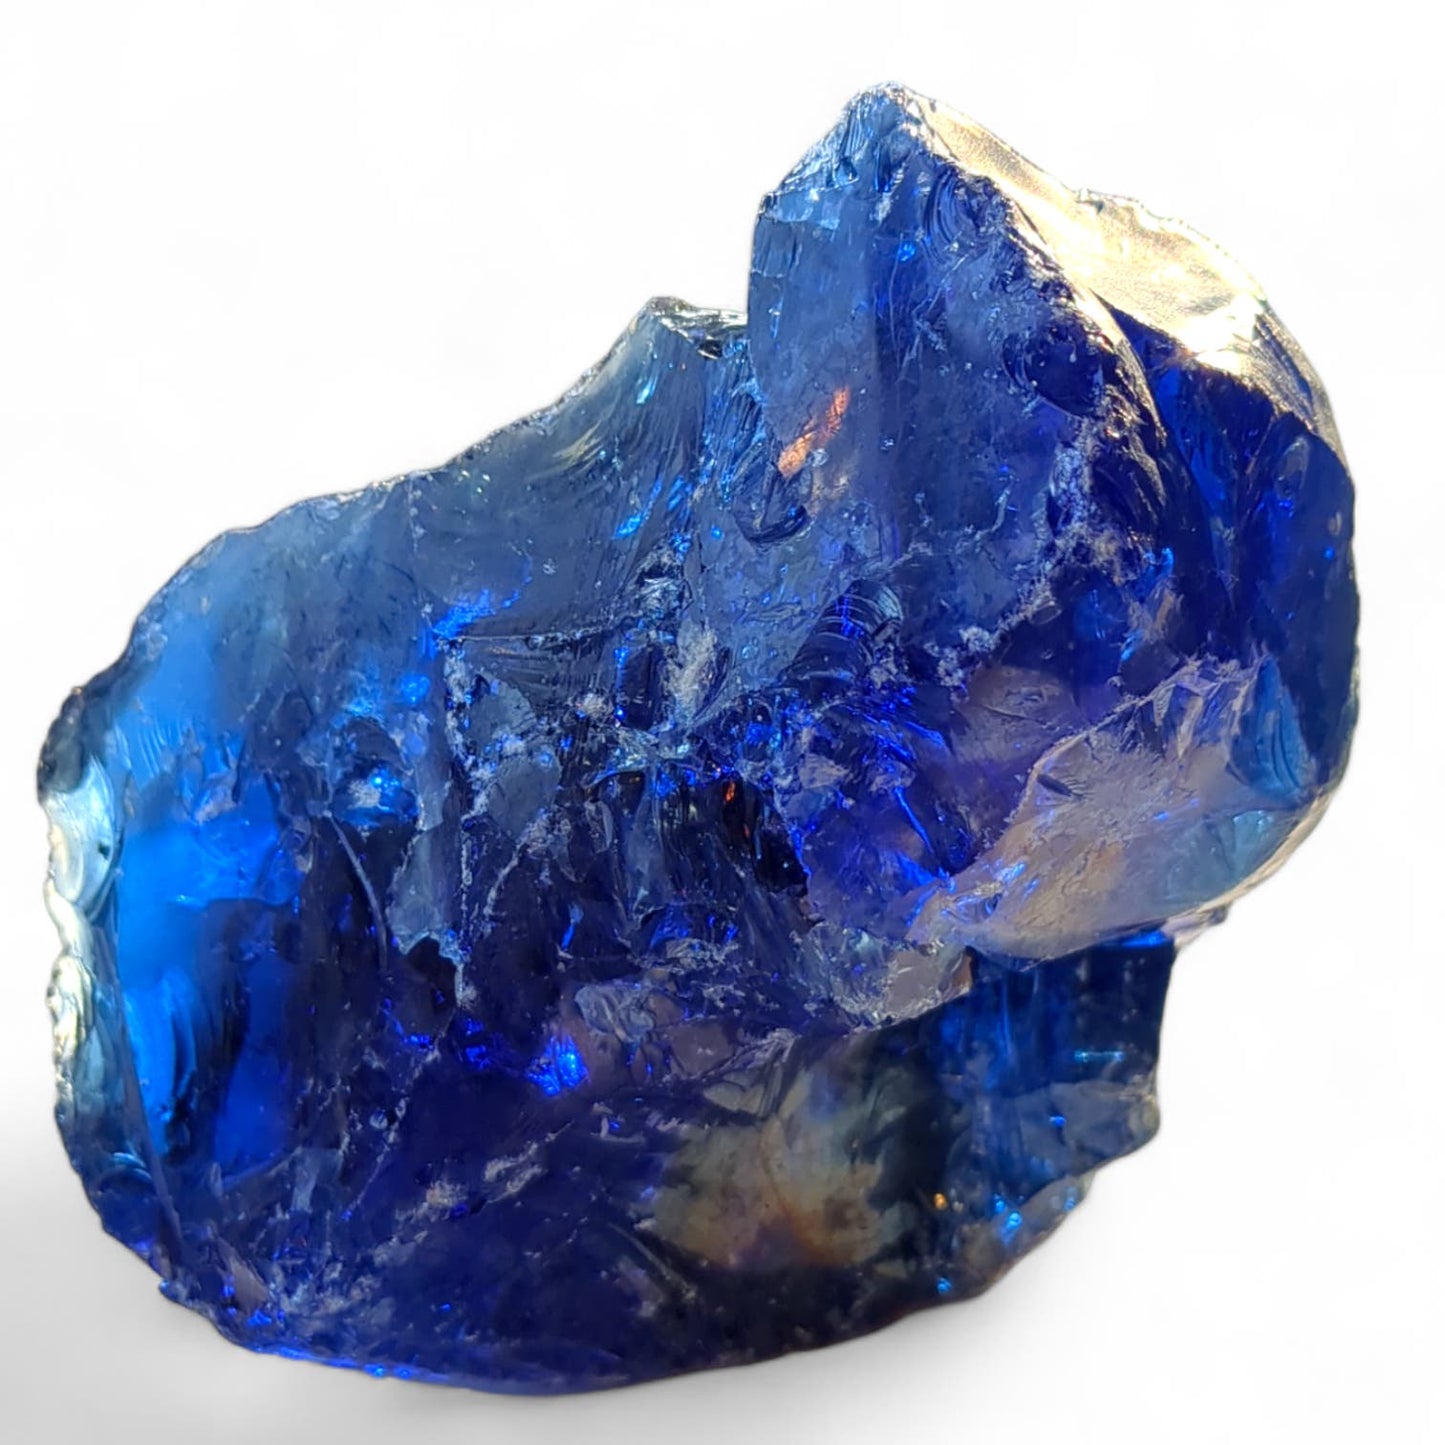 Cobalt Blue Art Glass Cullet Glowing Translucent Manganese Slag #4GX105